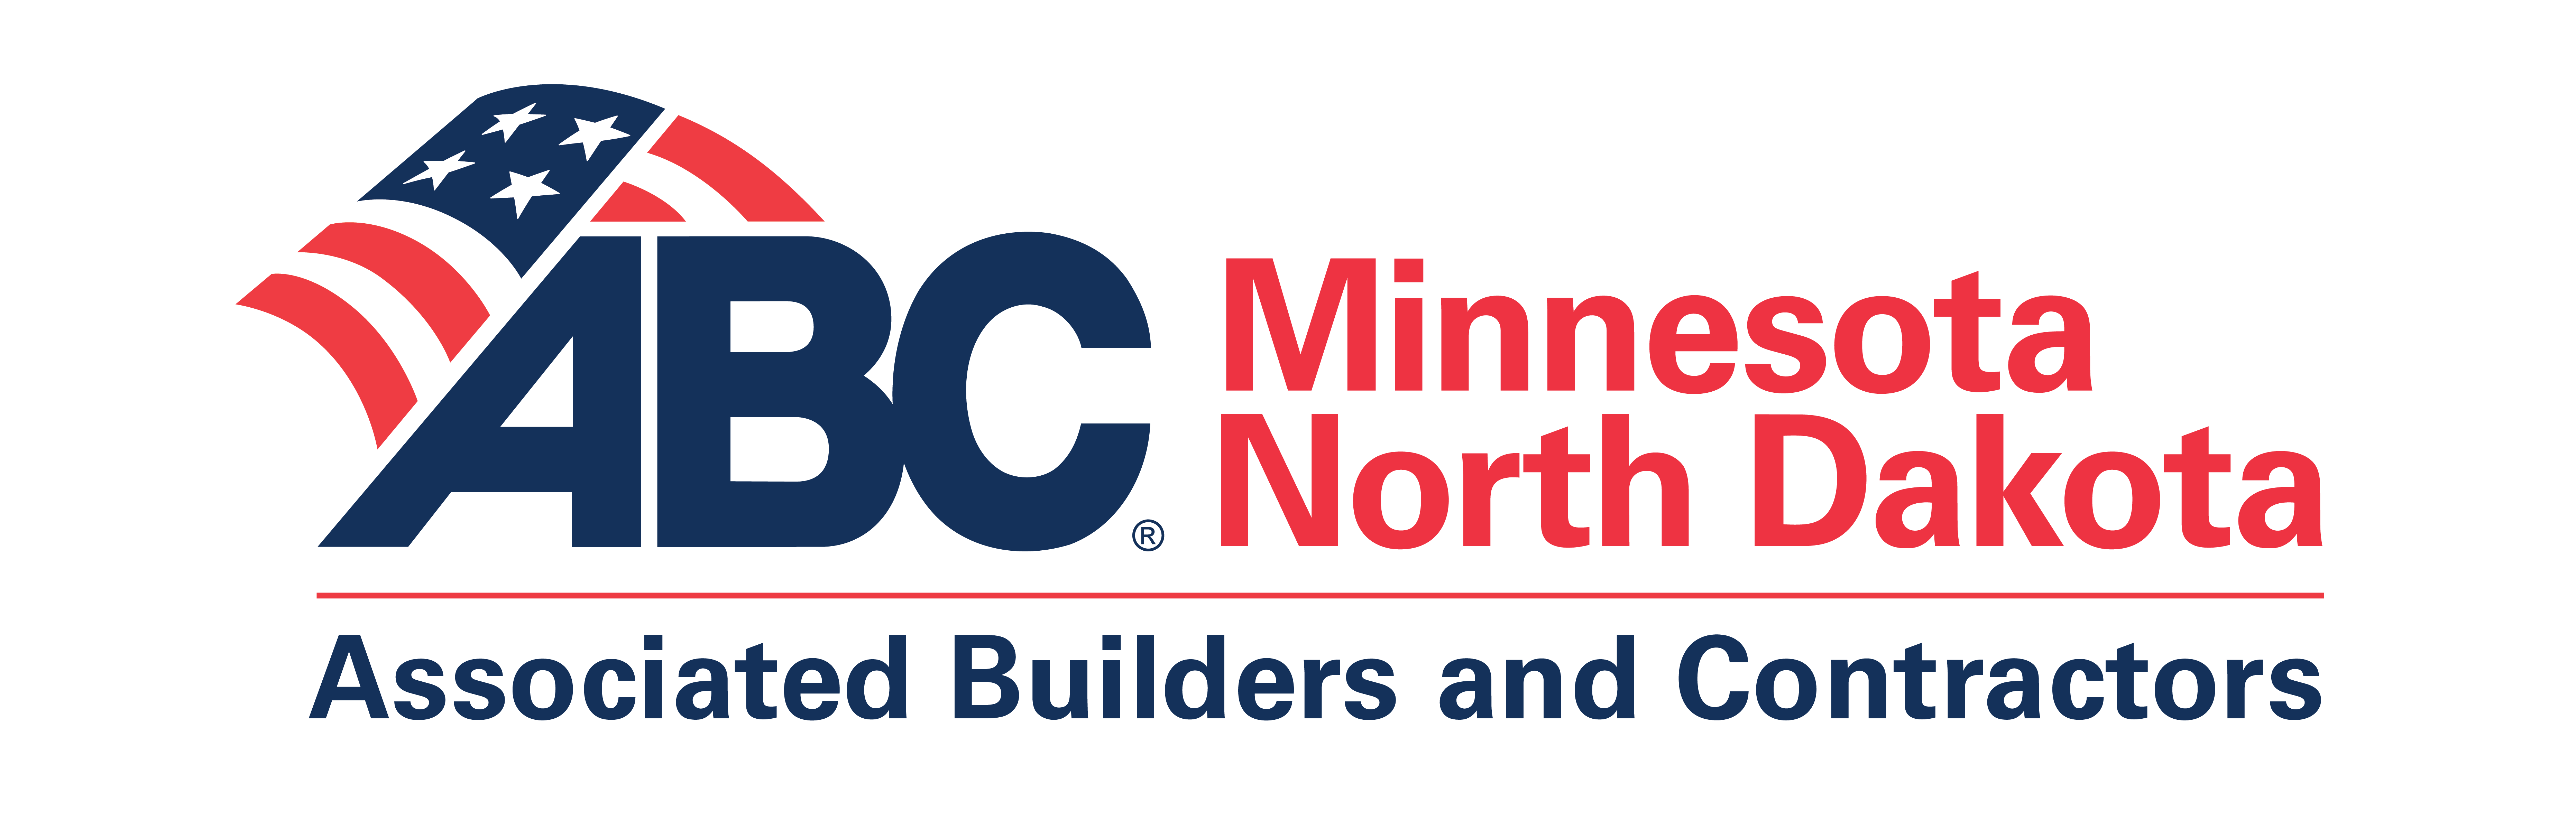 Associated Builders and Contractors - Minnesota North Dakota Chapter